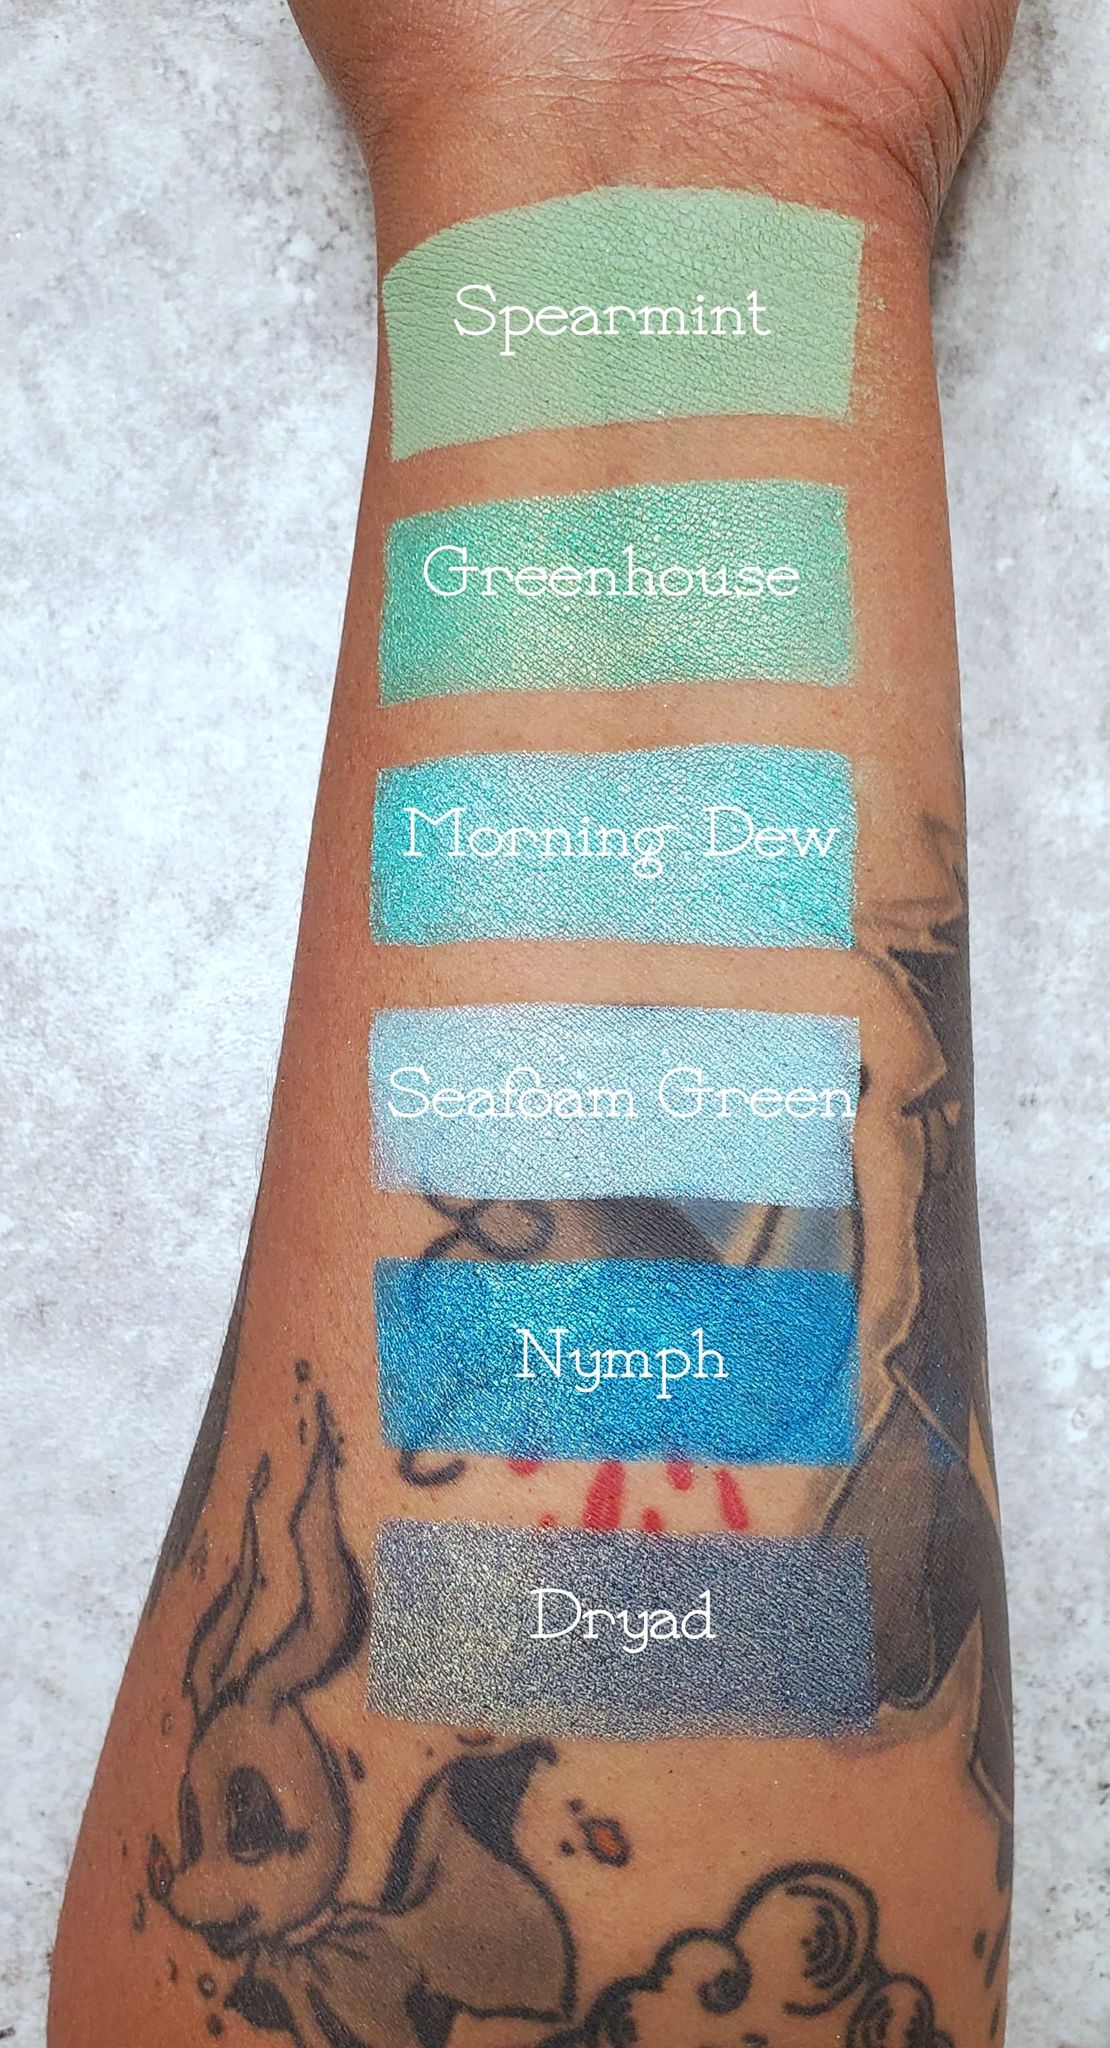 Morning Dew - Eyeshadow Duochrome Mint Green Silver